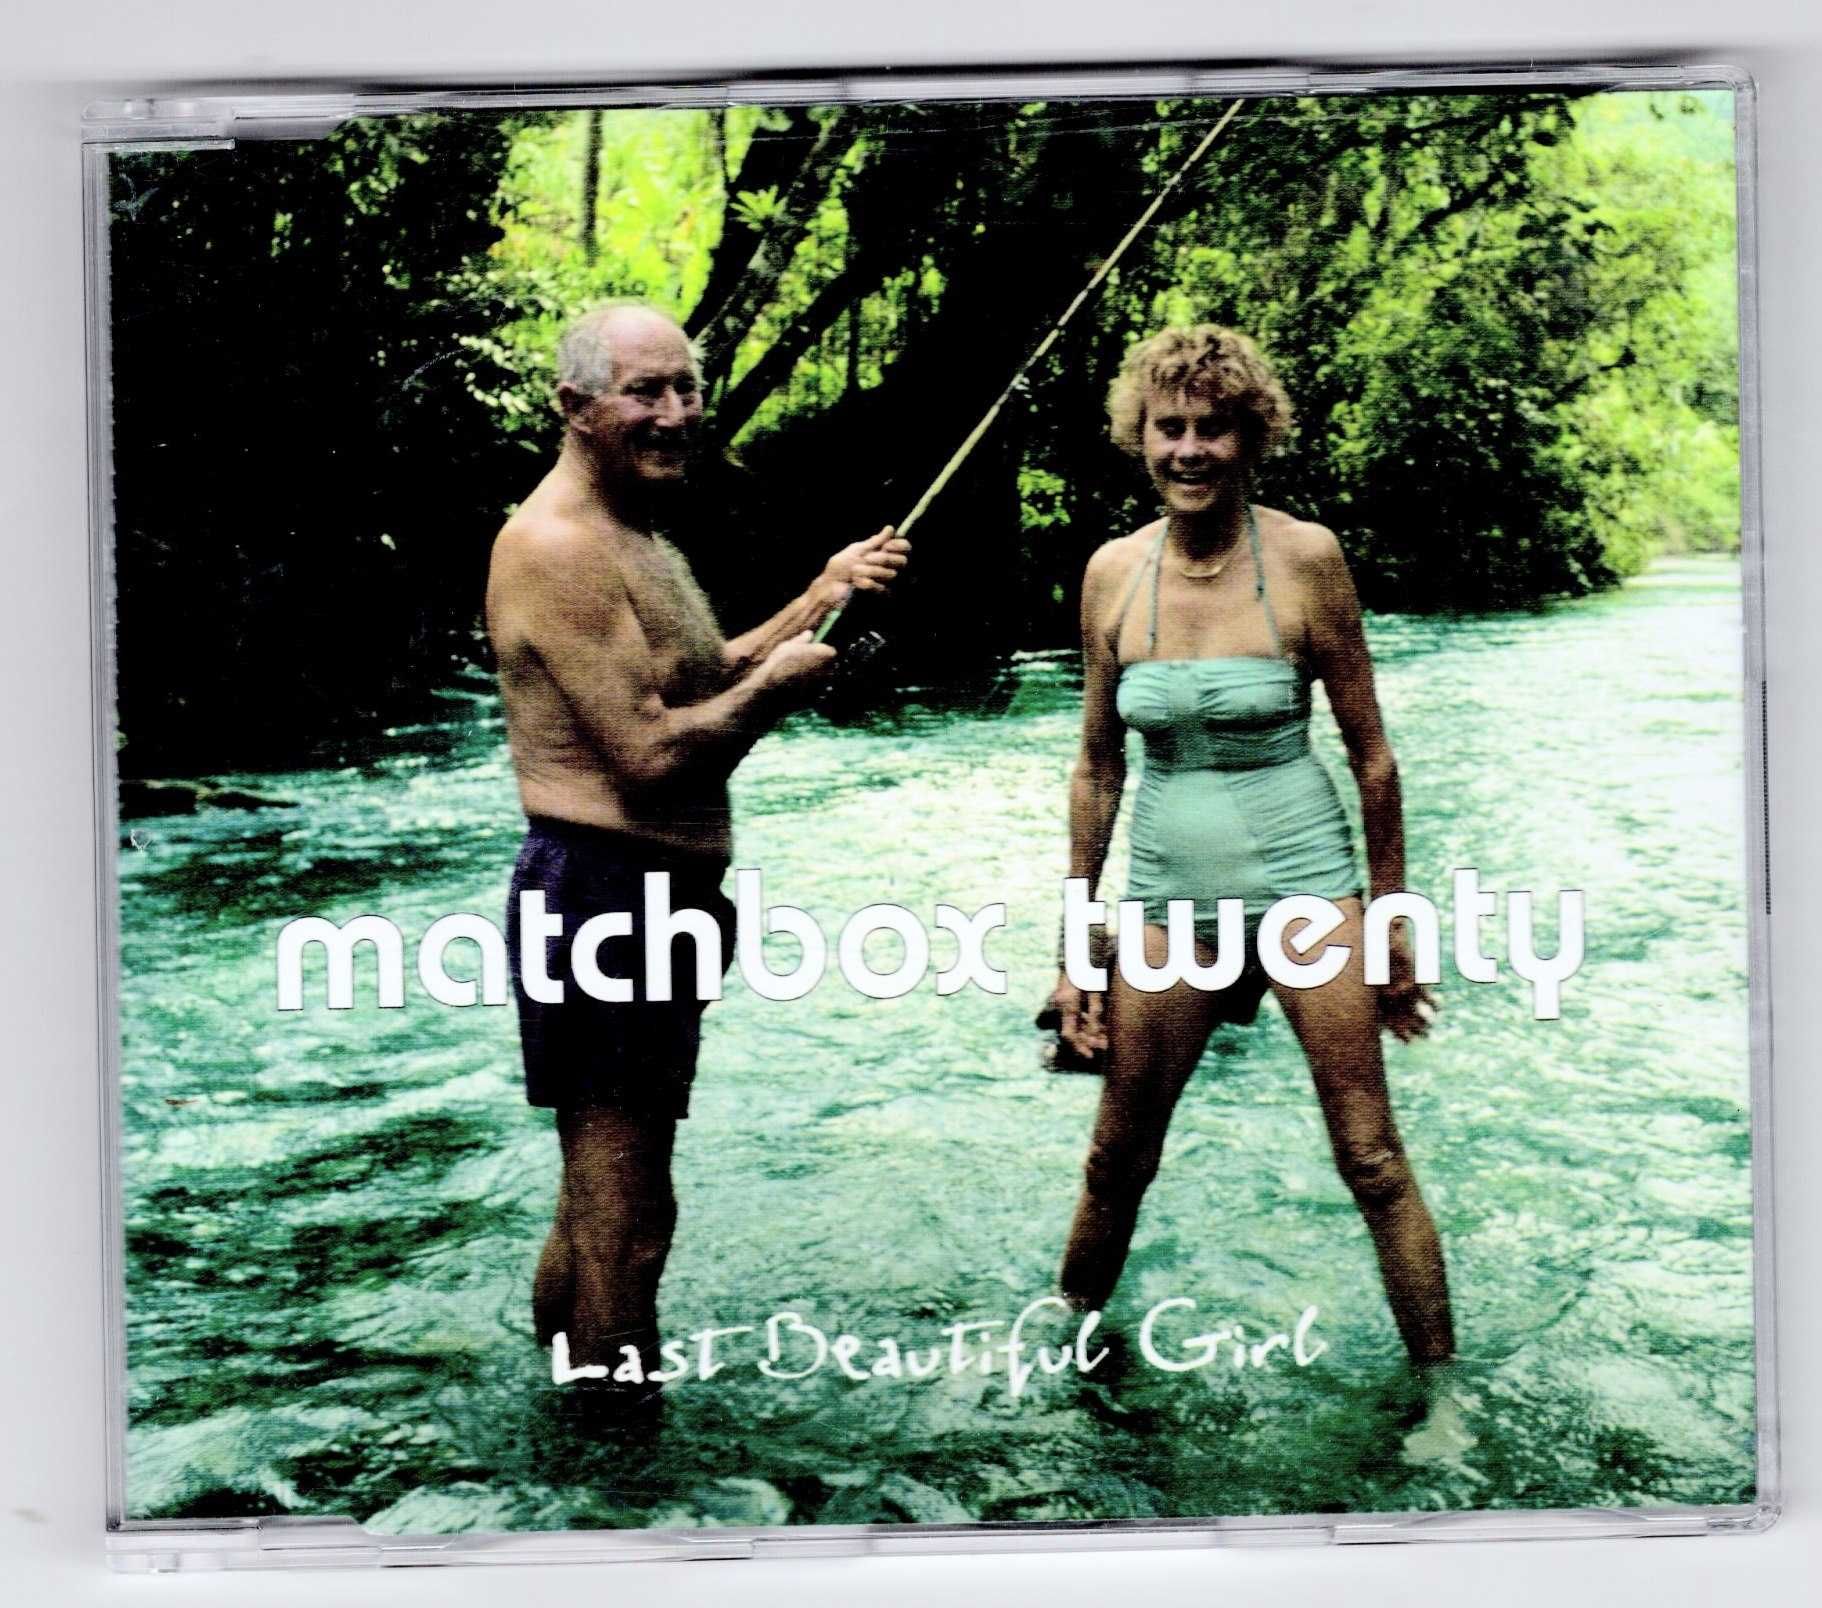 Matchbox Twenty - Last Beautiful Girl (CD, Singiel)